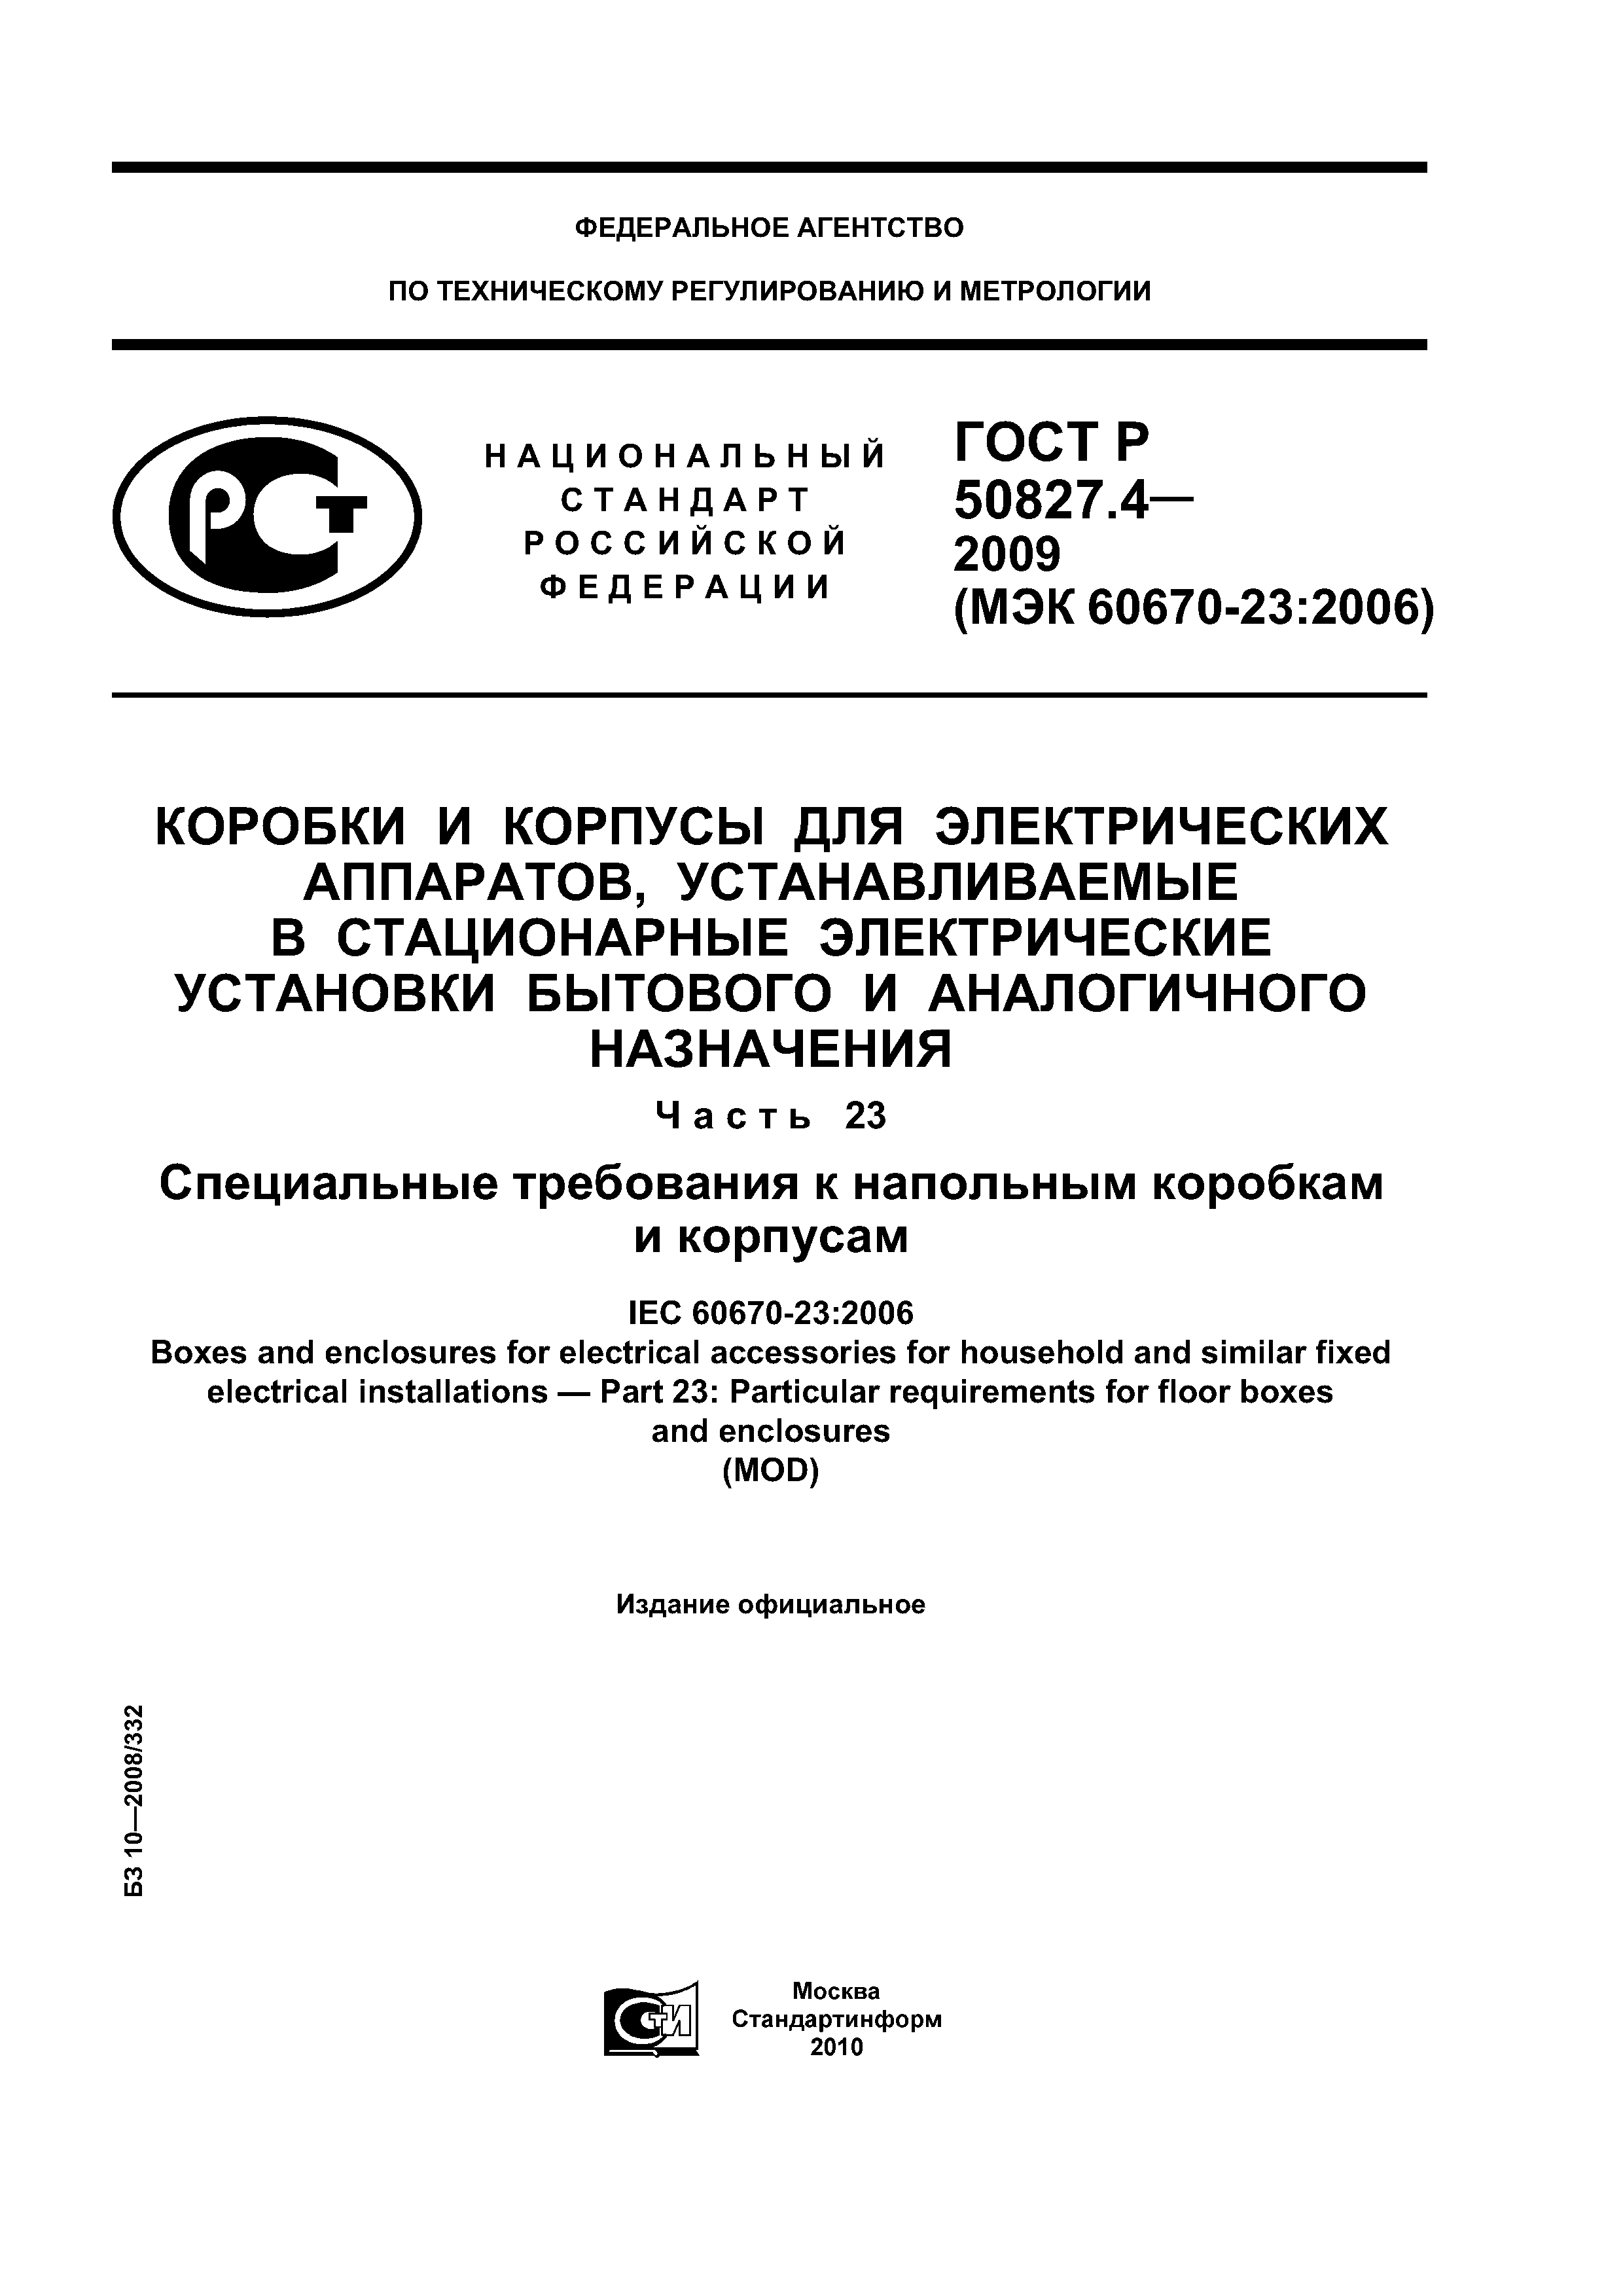 ГОСТ Р 50827.4-2009